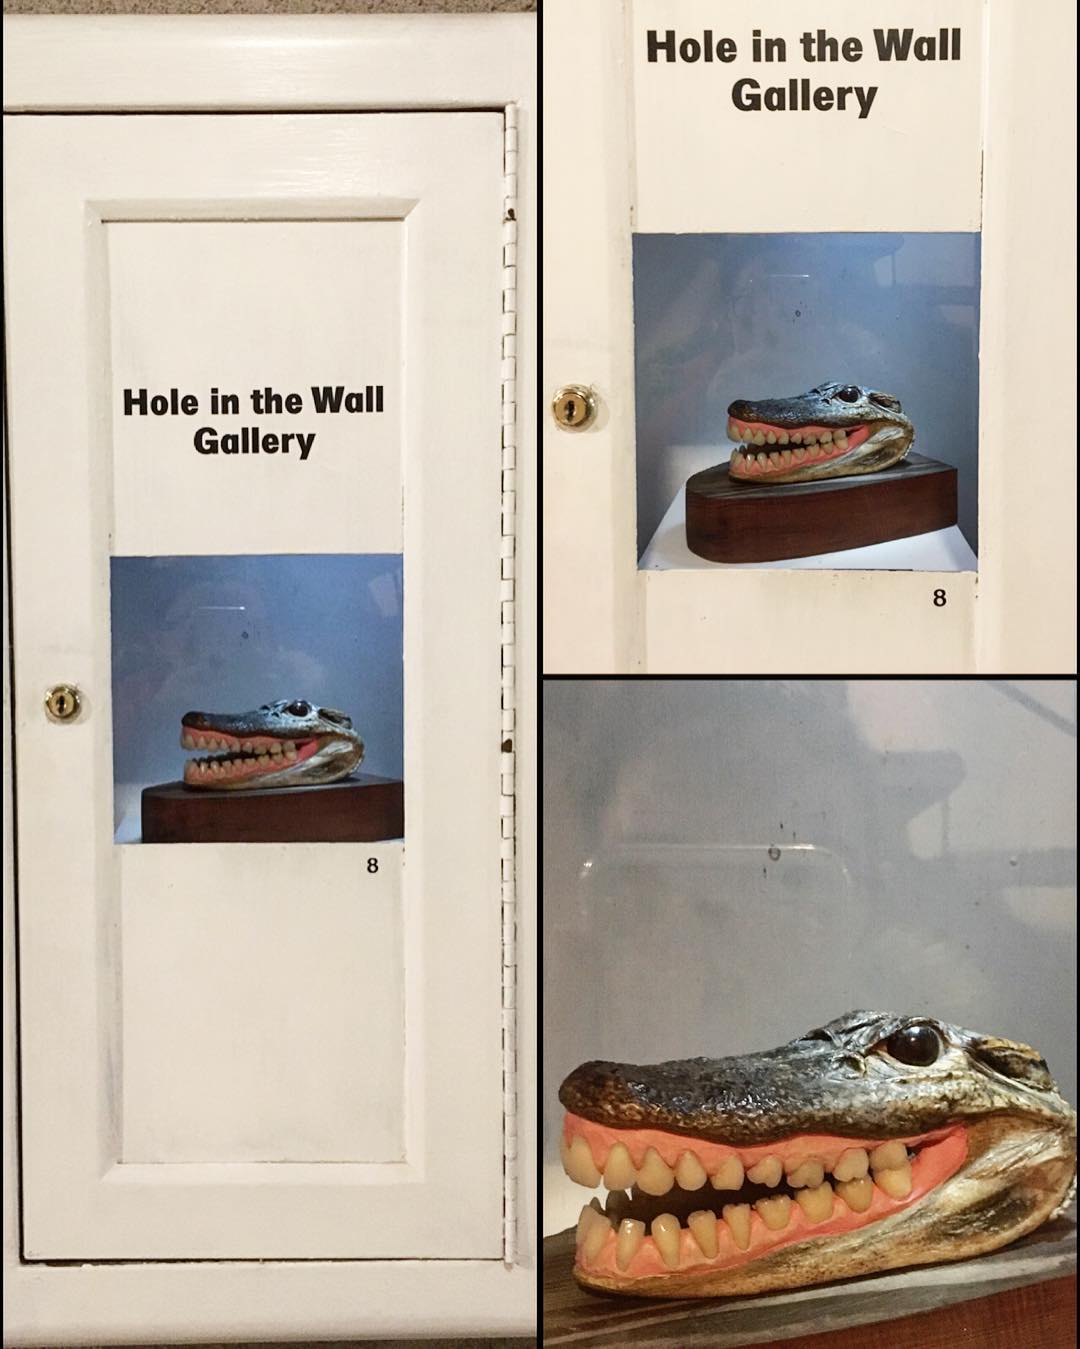 best-gallery--museum-ever-54366---croc-crocodile-alligator-gator-dentures-holeinthewall-littlesurprises-smile_25138575333_o.jpg